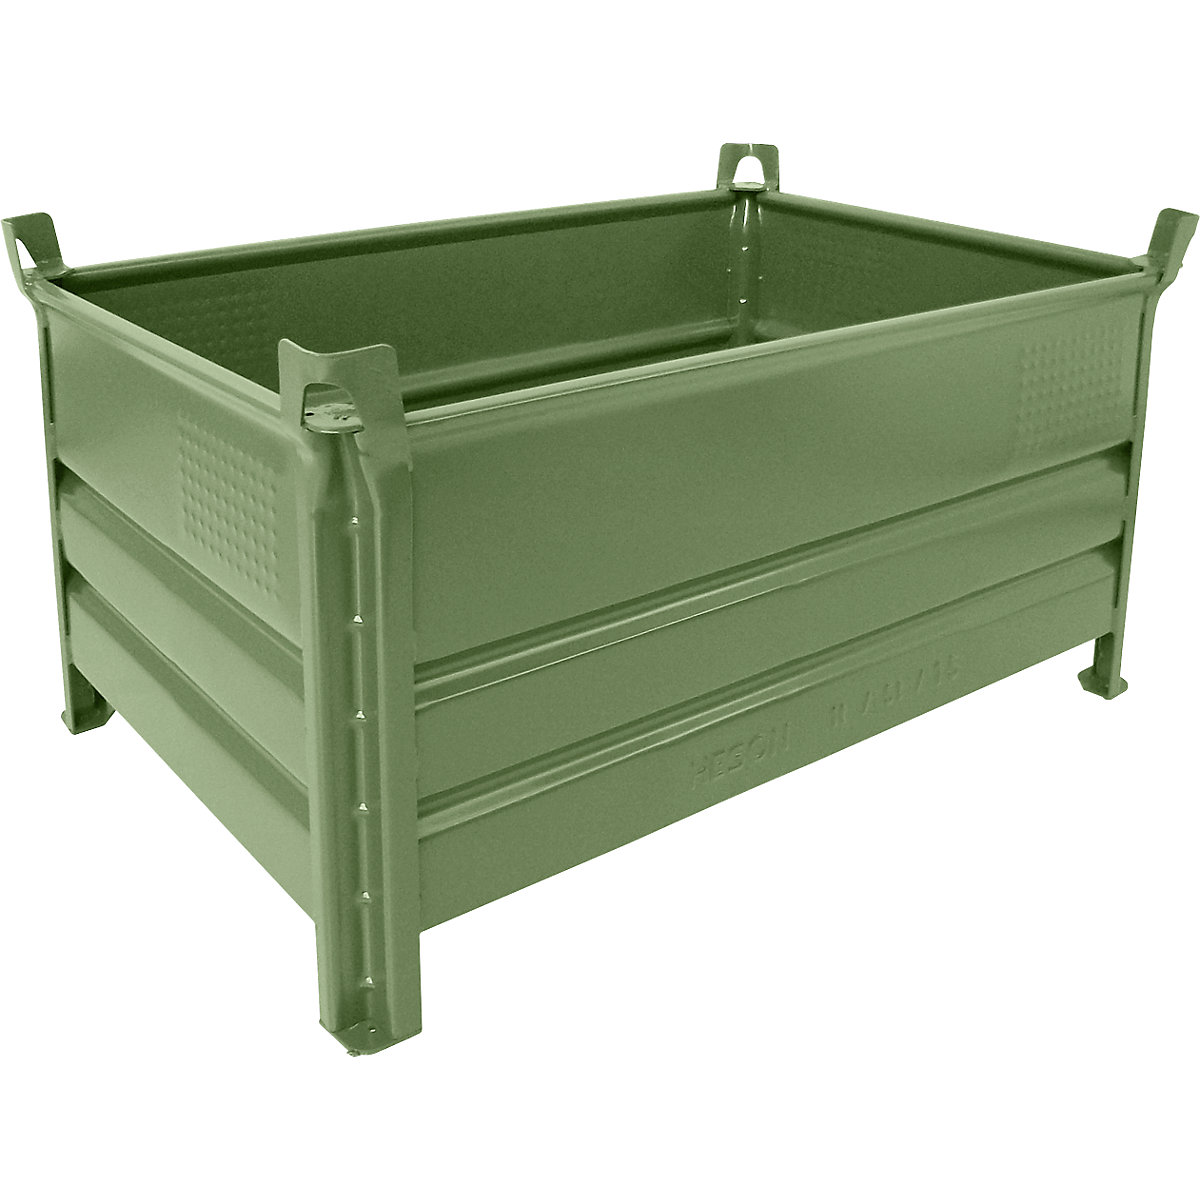 Heson Vollwand-Stapelbehälter, BxL 800 x 1200 mm, Traglast 2000 kg, grün, ab 1 Stk